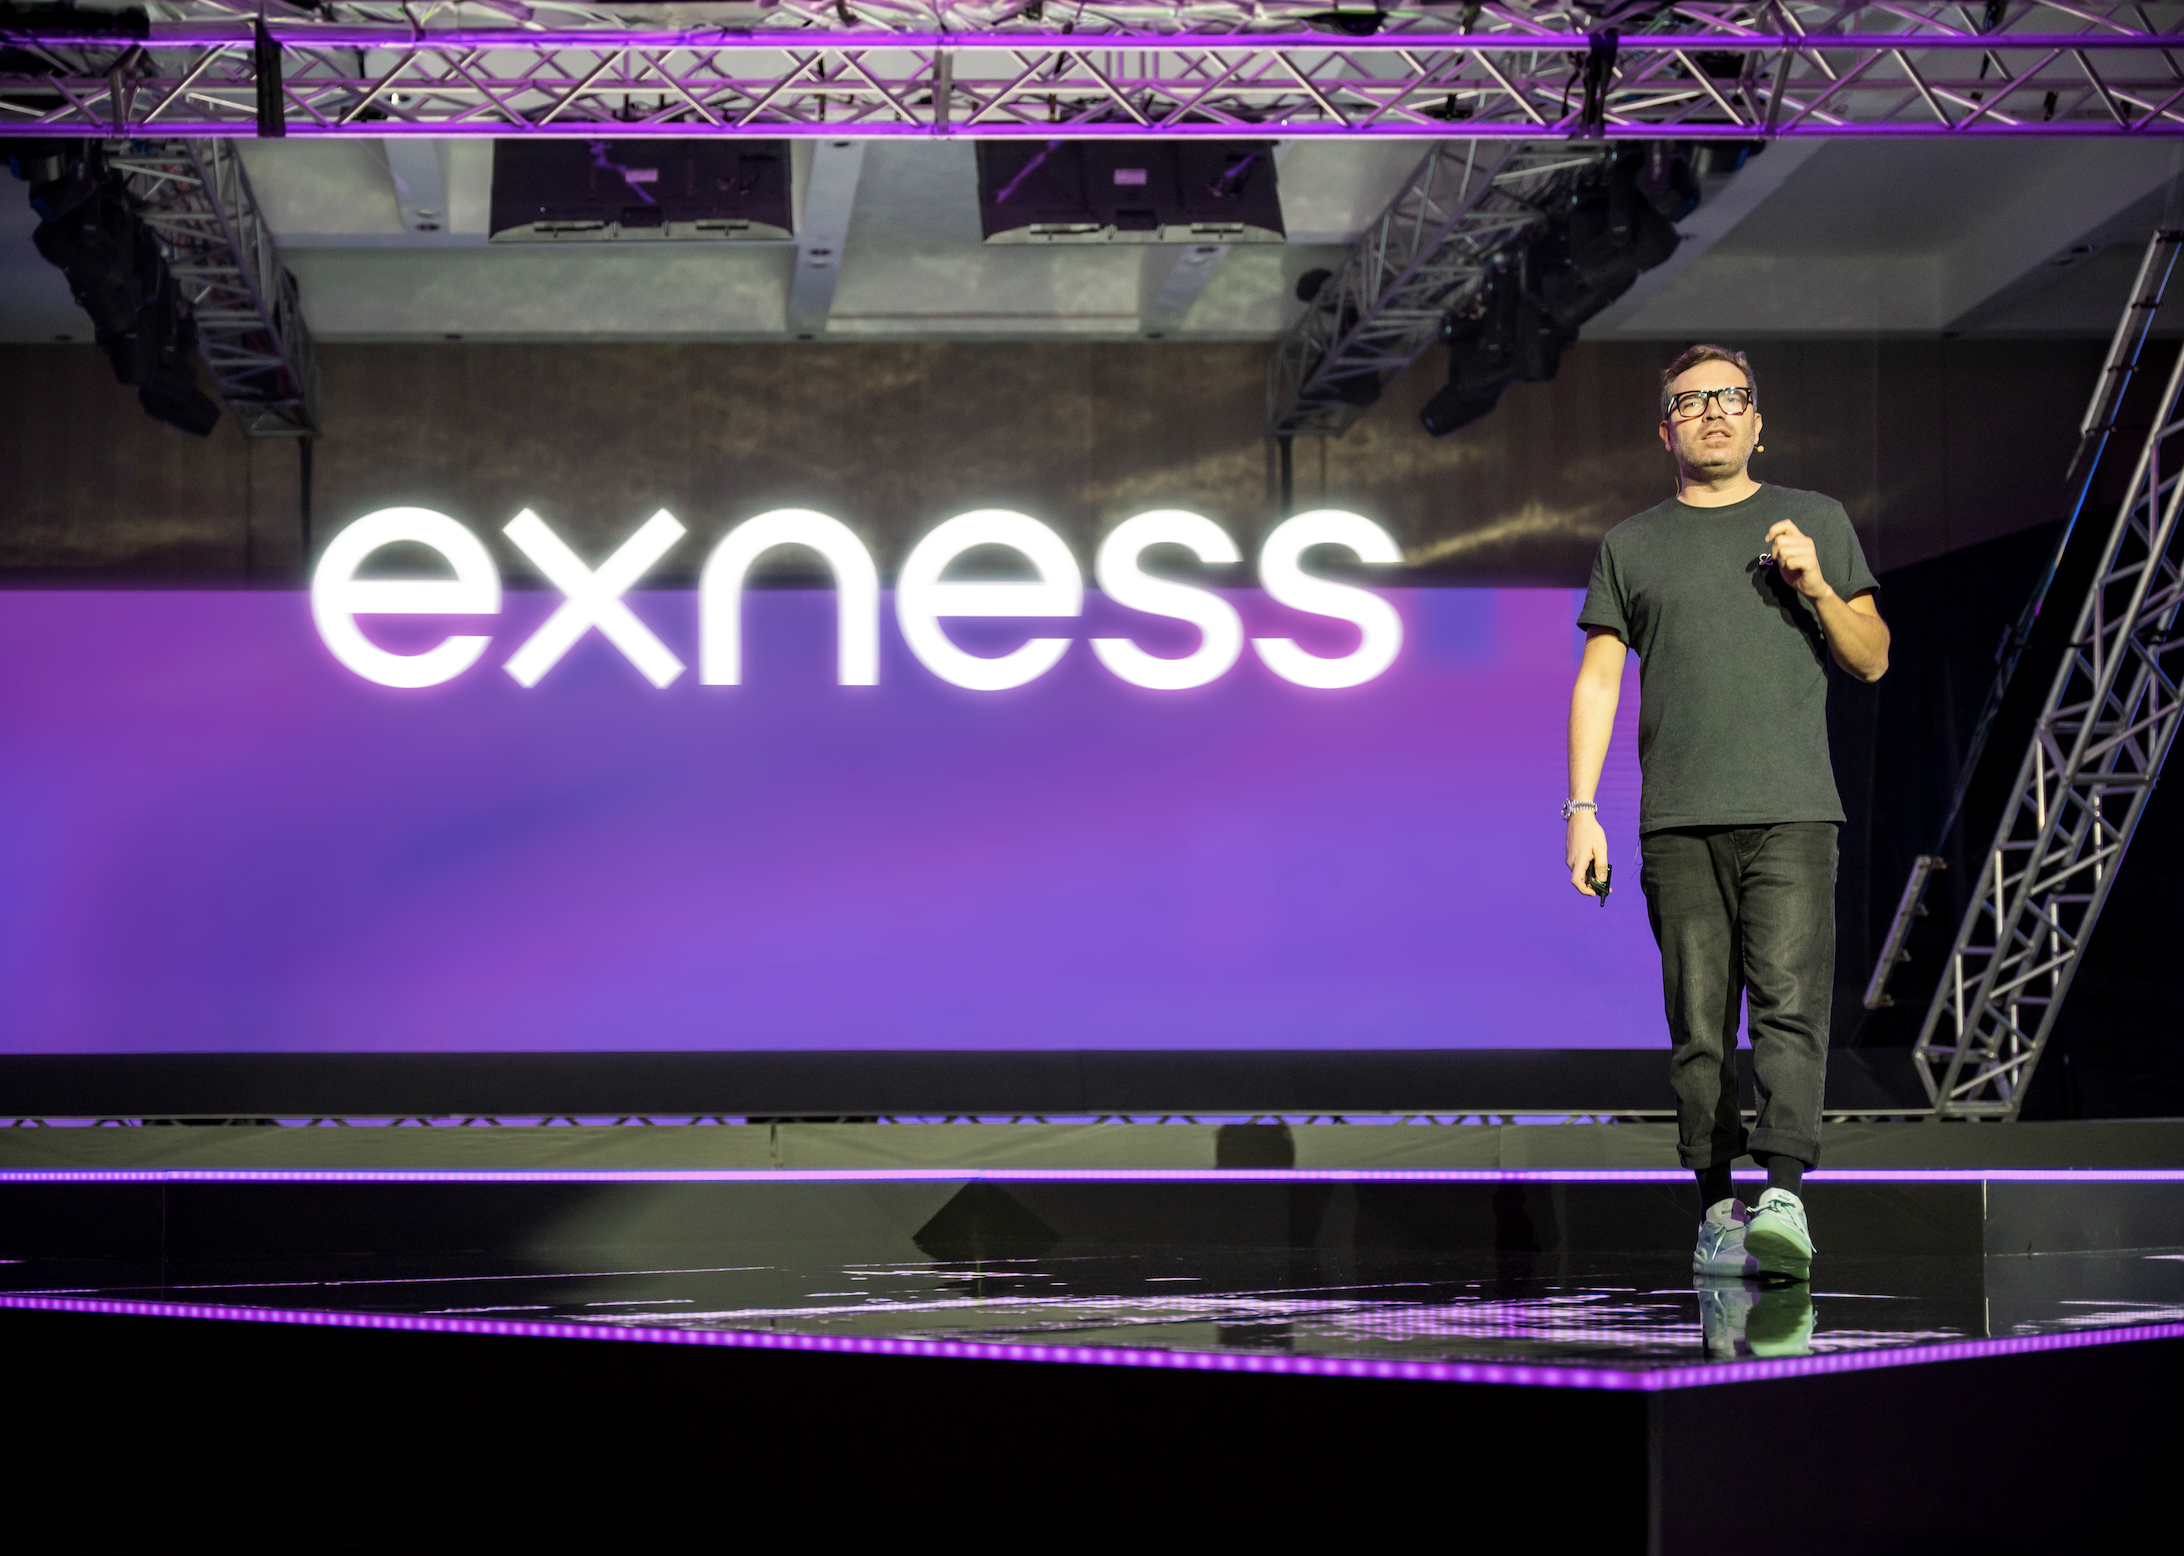 H Exness ανεβάζει το brand της σε νέα επίπεδα, έπειτα από 15 χρόνια ασύλληπτης ανάπτυξης